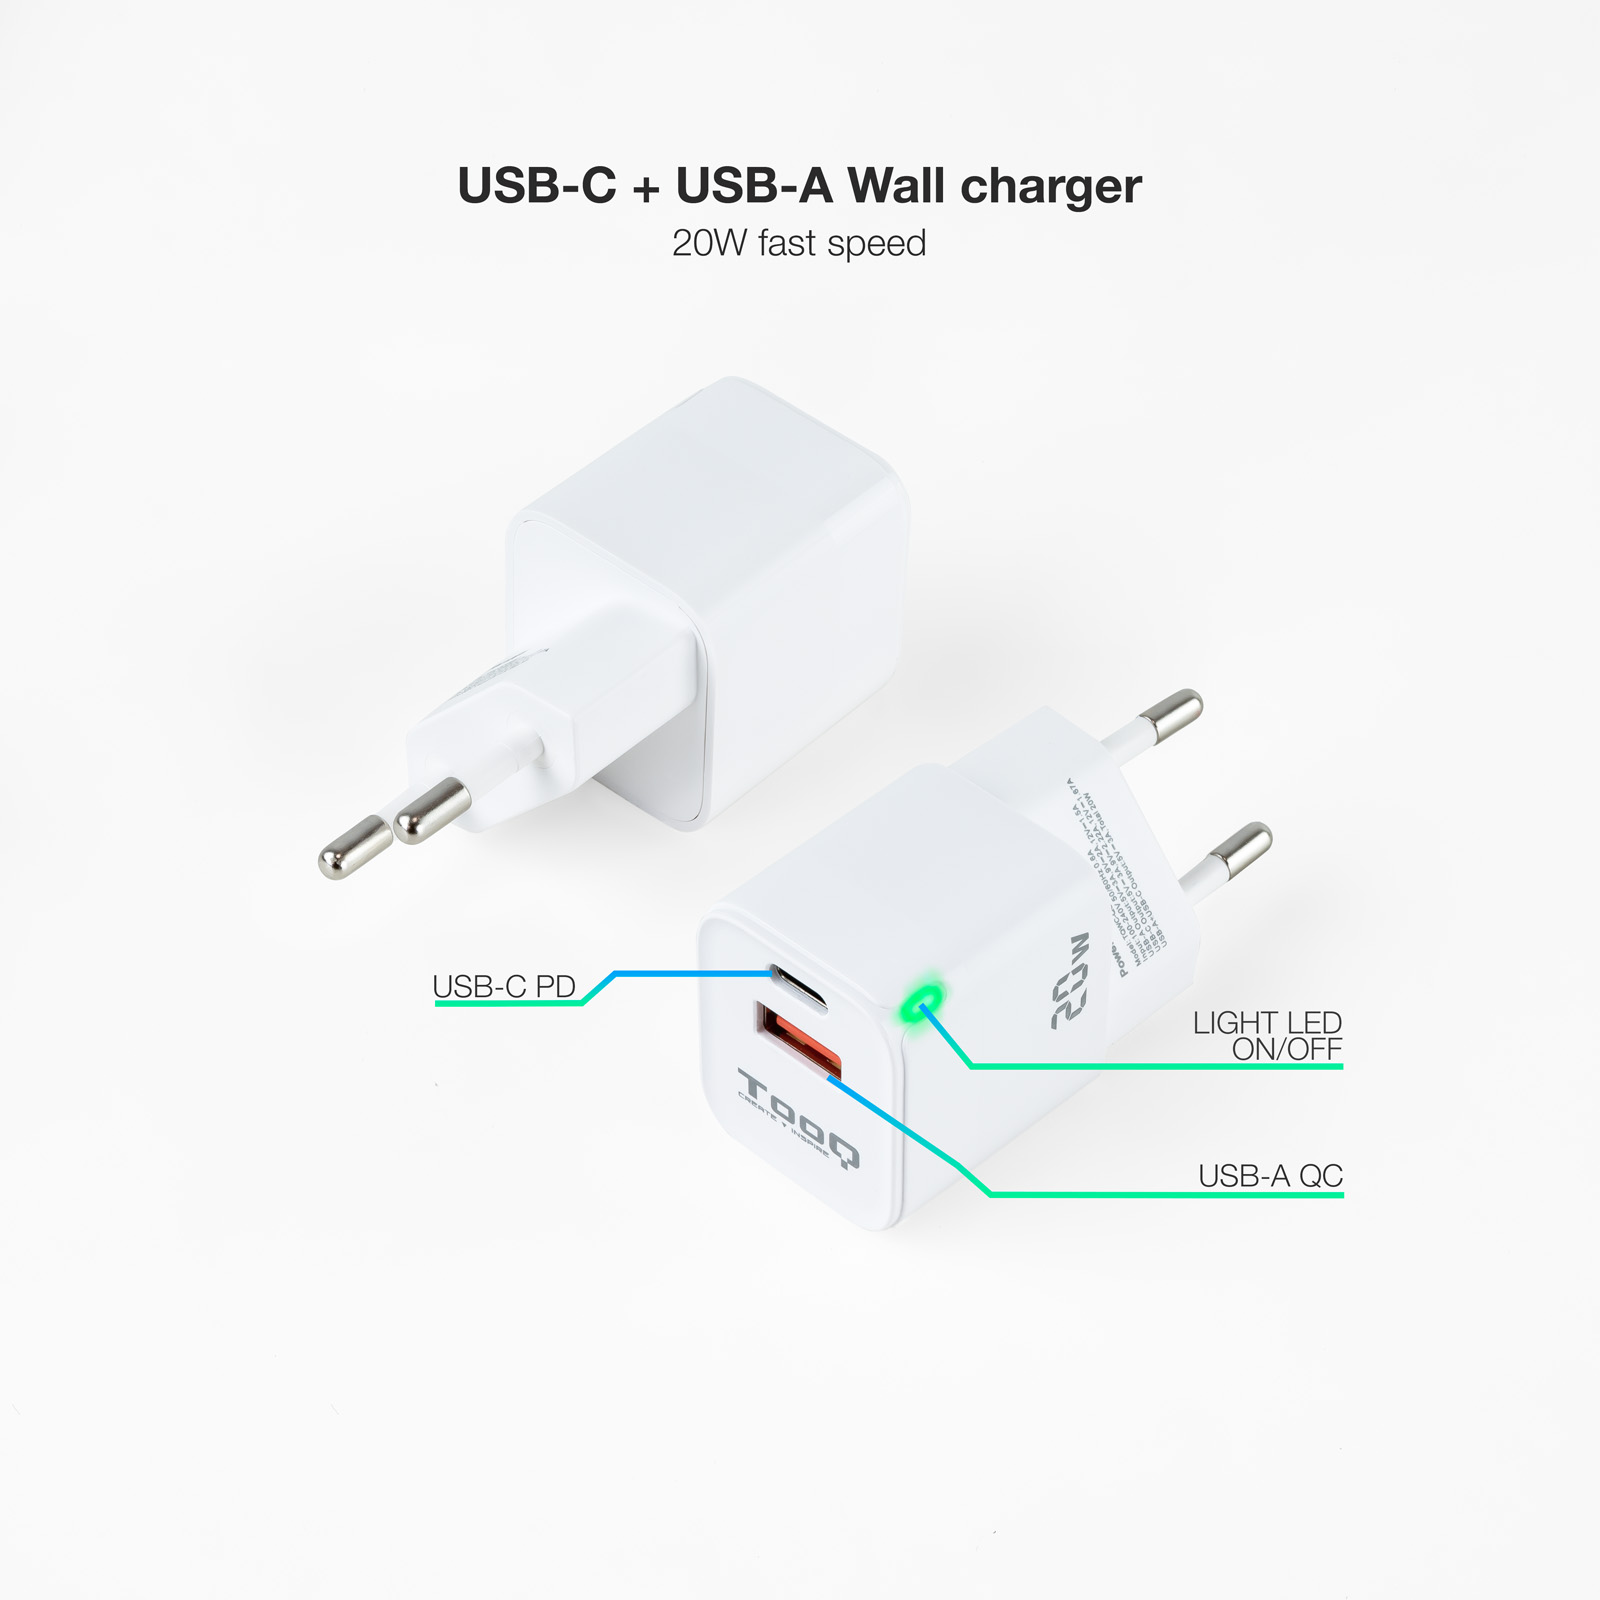 Tooq Chargeur Mural USB-C/PD + USB-A/QC 20W - Couleur Blanche